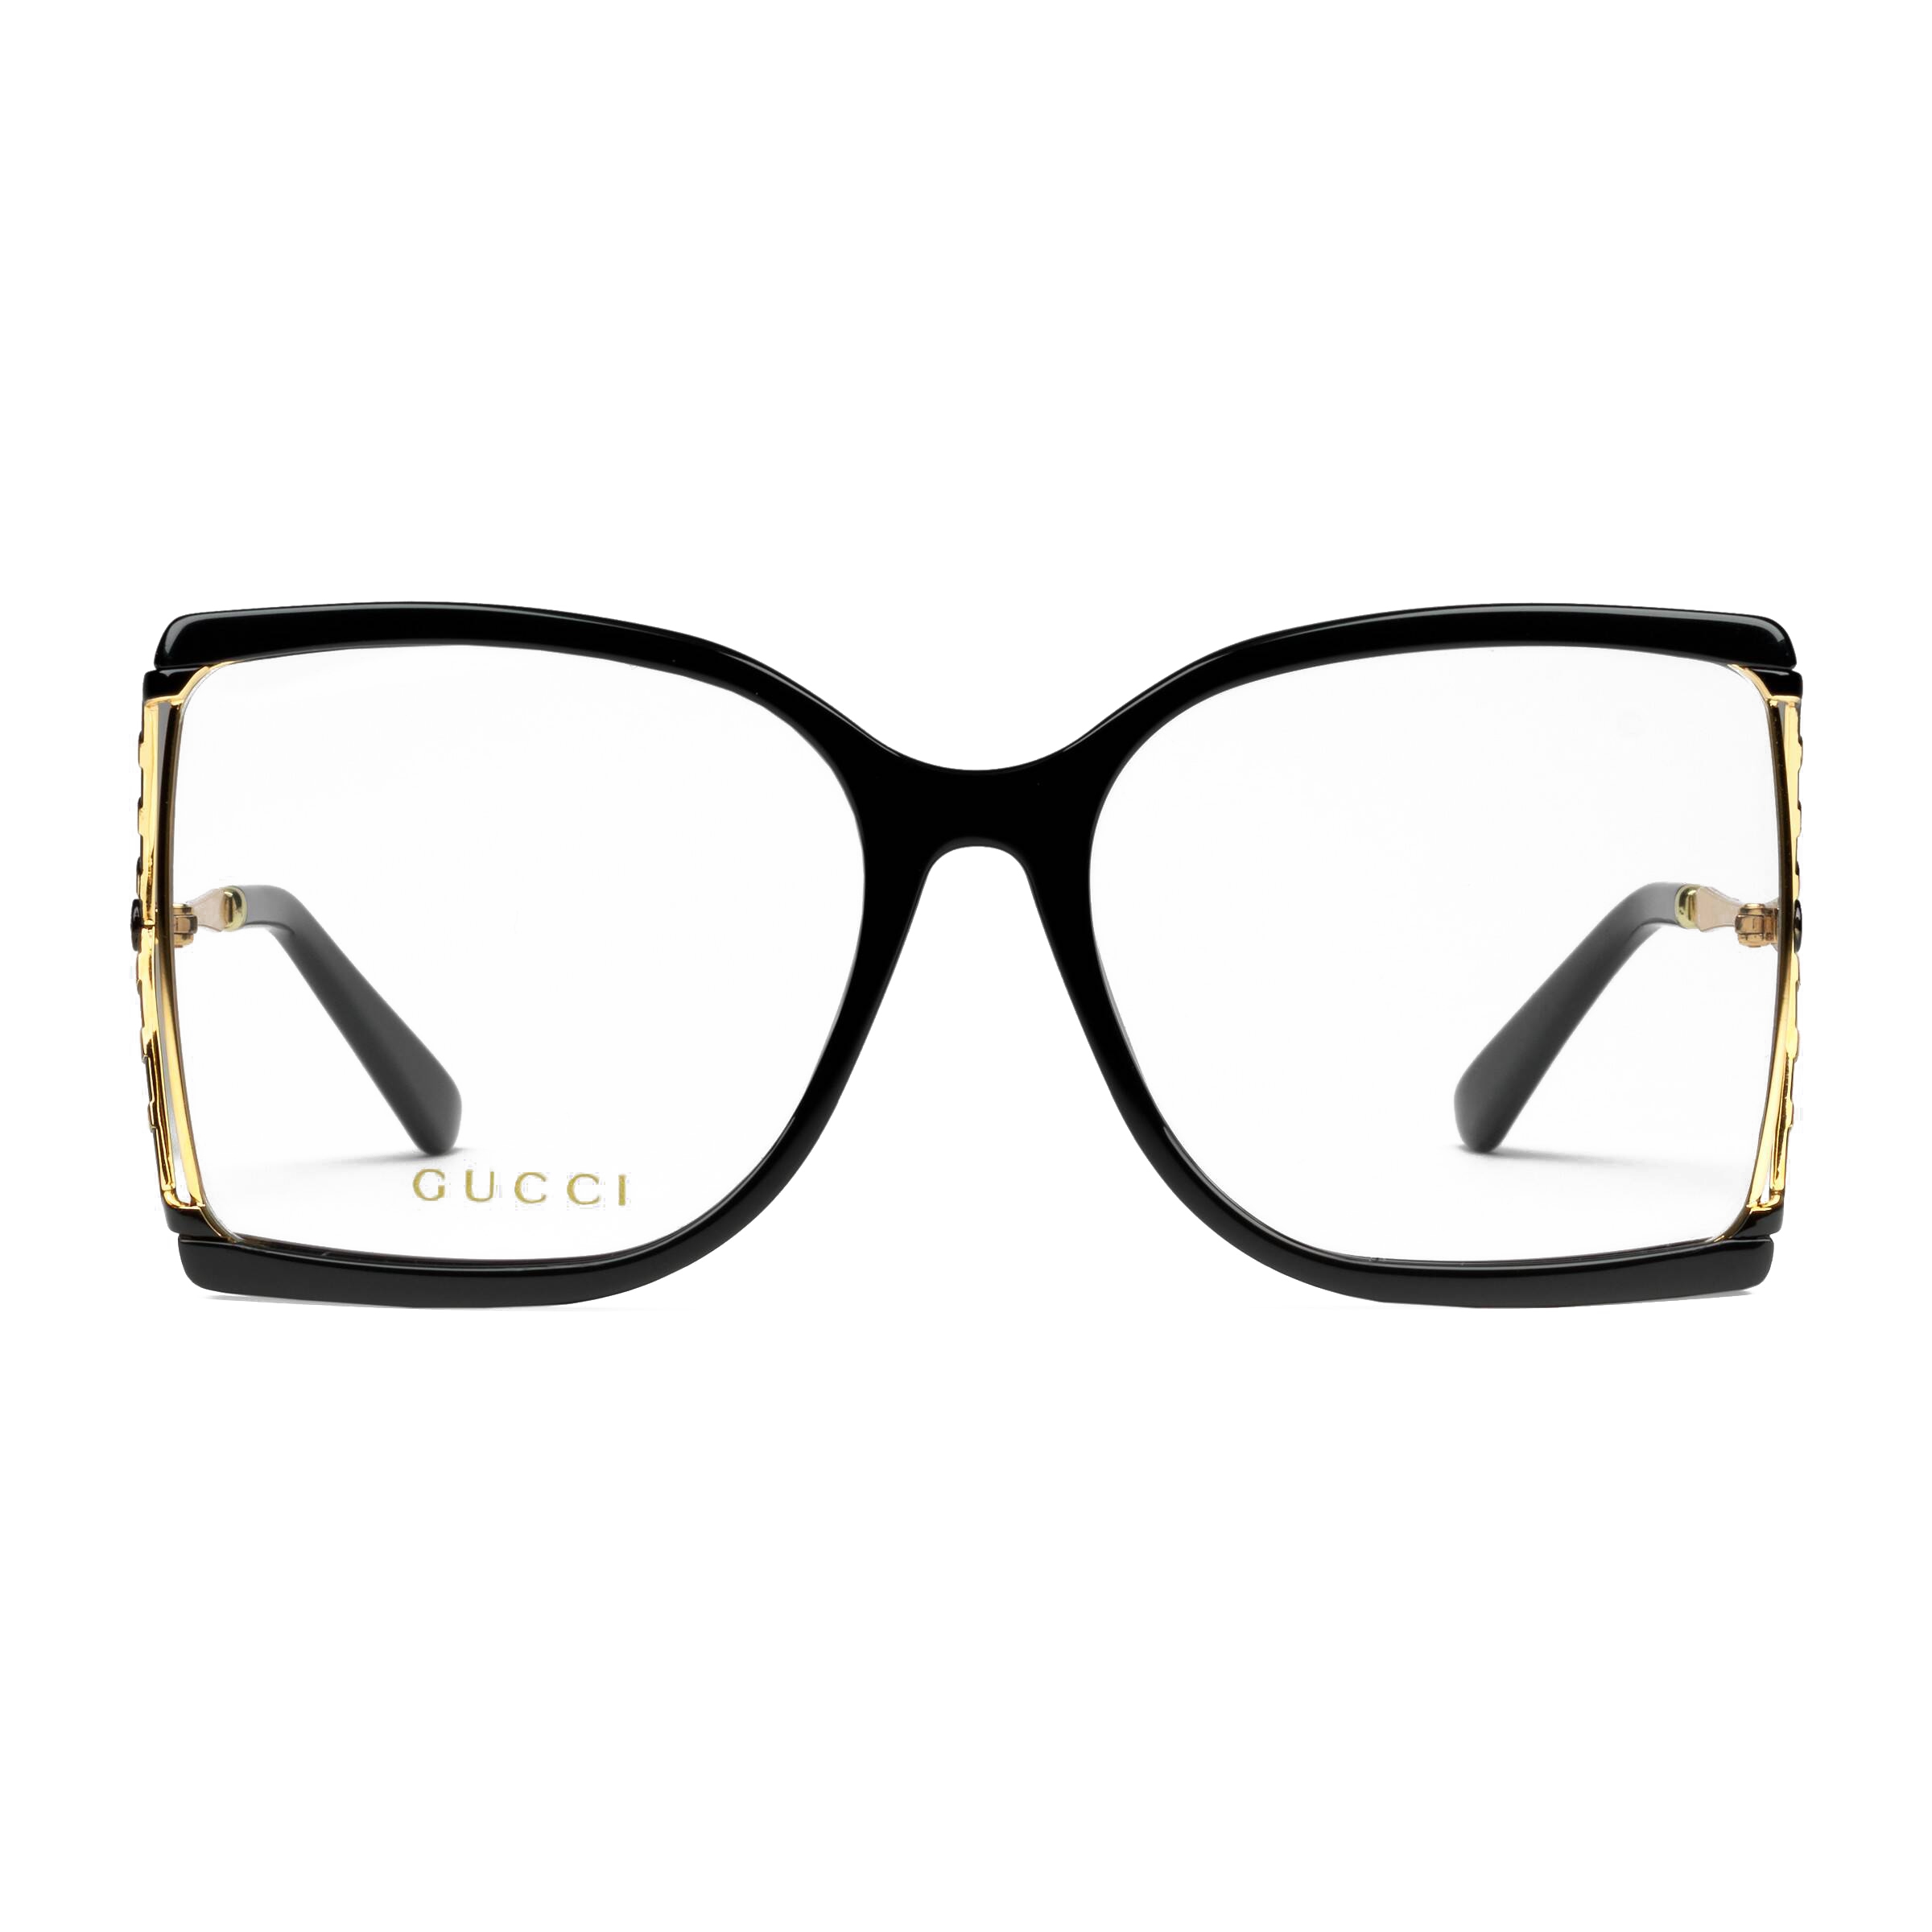 gucci glasses black frame